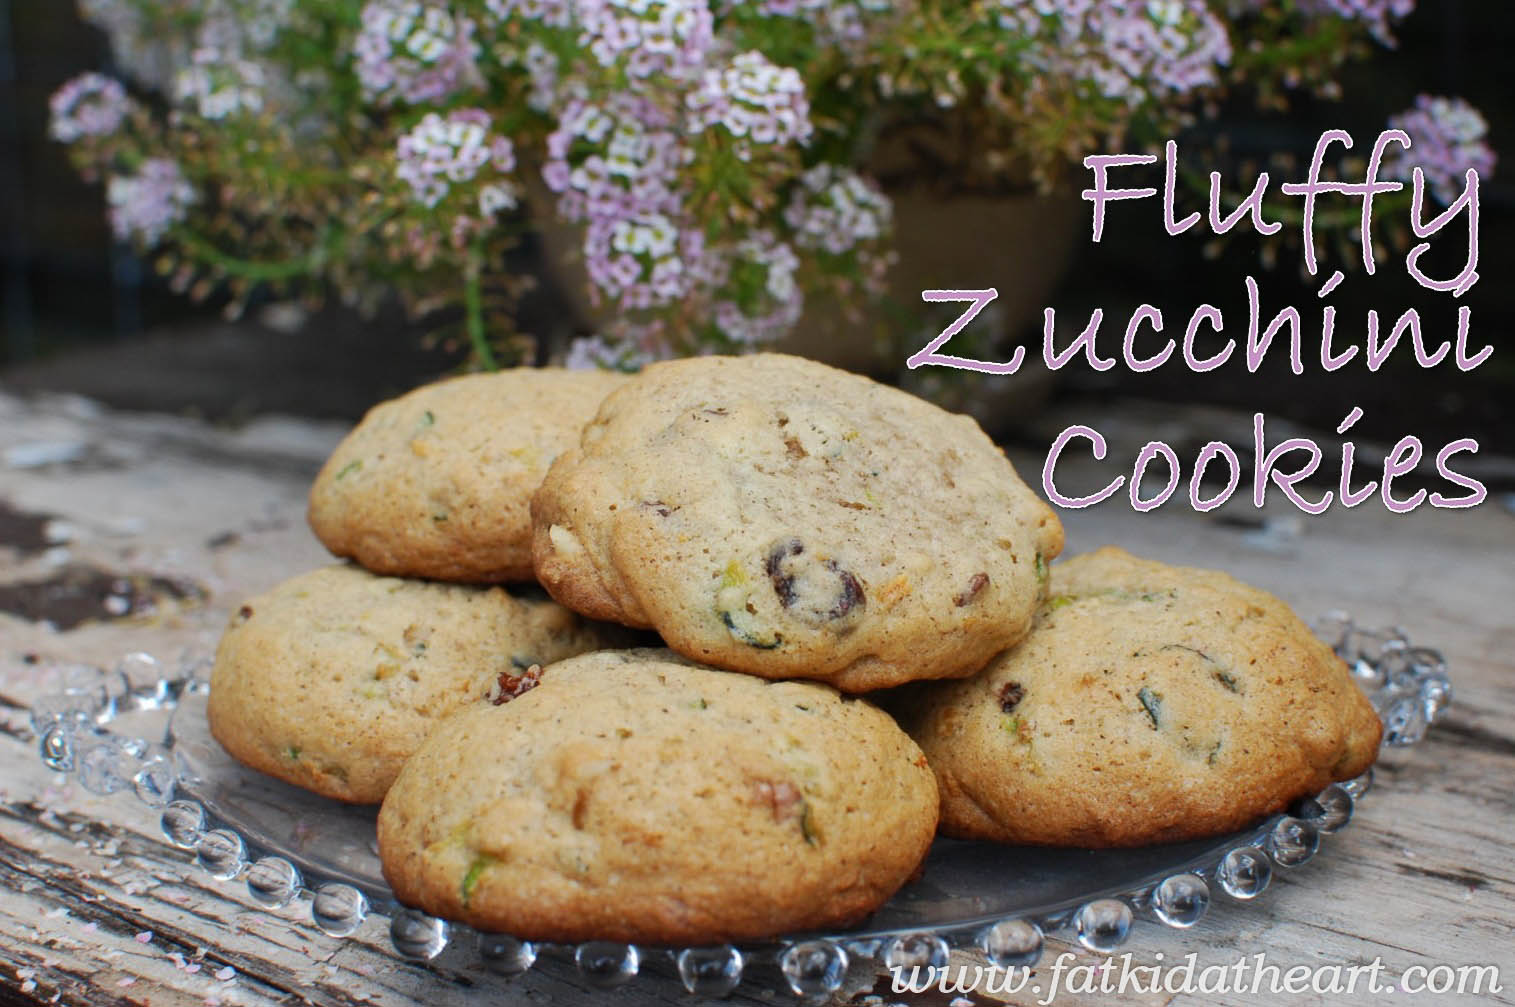 Fluffy Zucchini Cookies from www.fatkidatheart.com